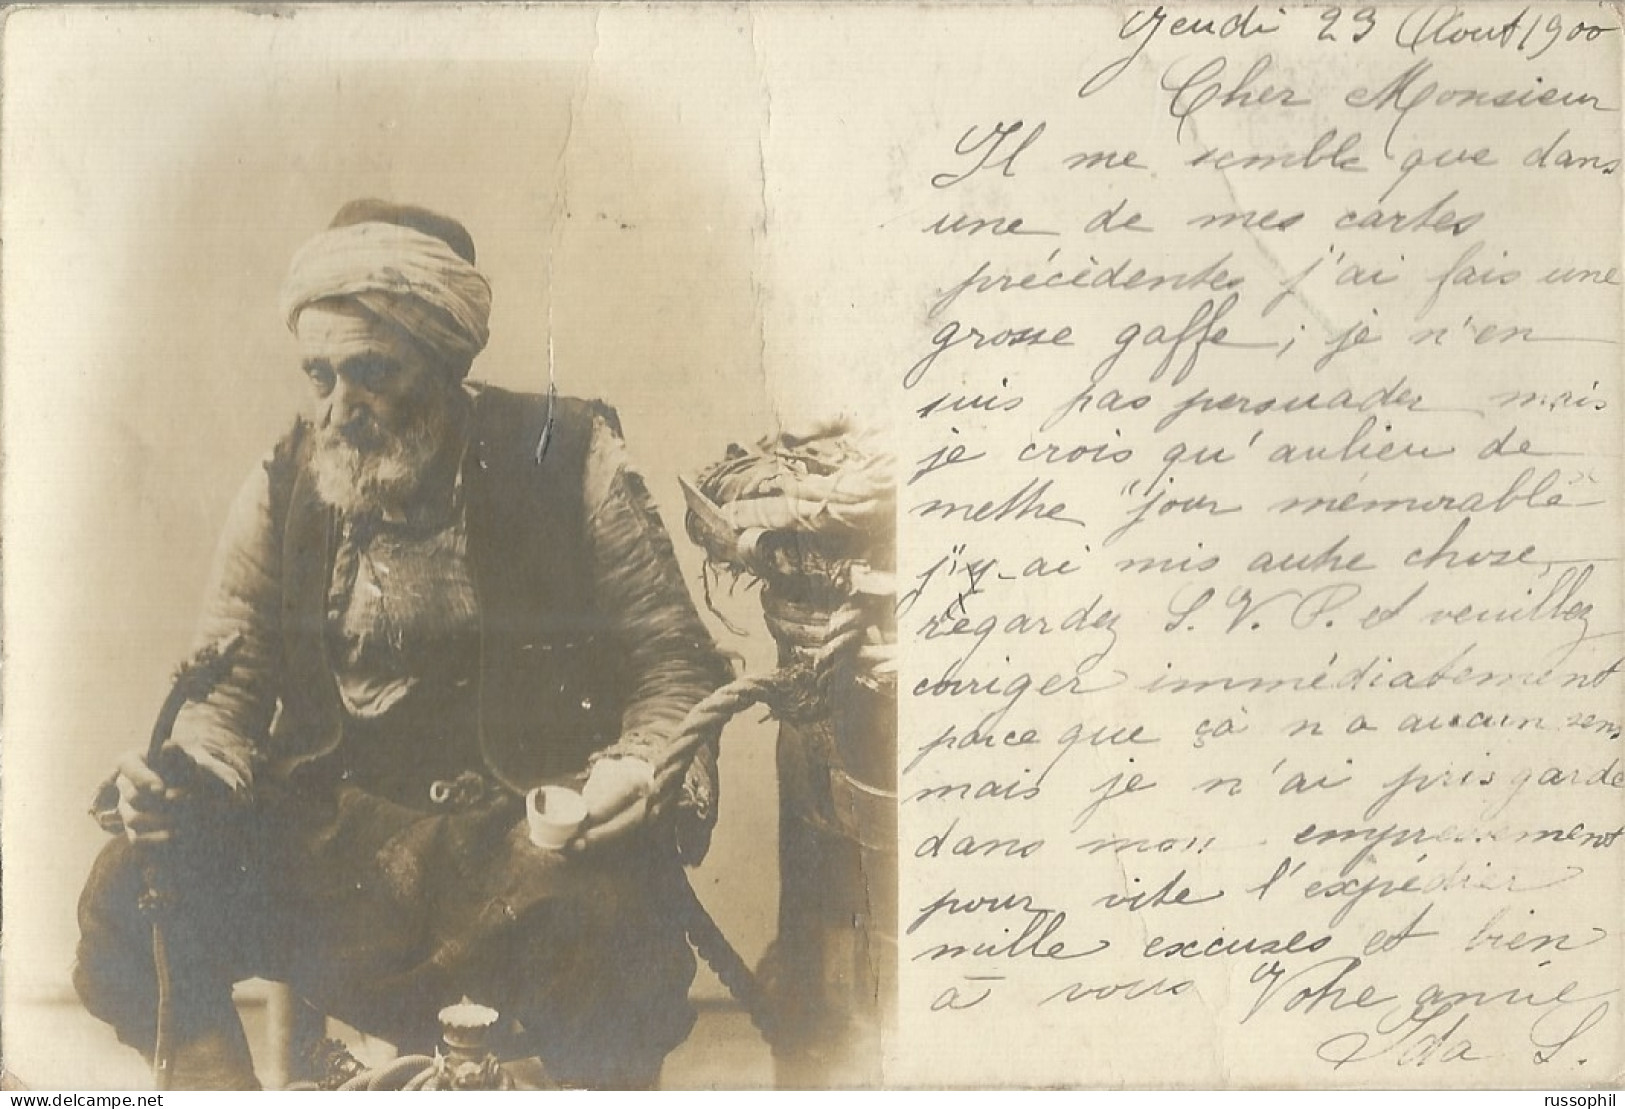 TURKIYE - PHOTOCARD - STREET SCENE  - SAT OLD MAN SMOKING AND DRINKING COFFEE  - 1900 - Turkije